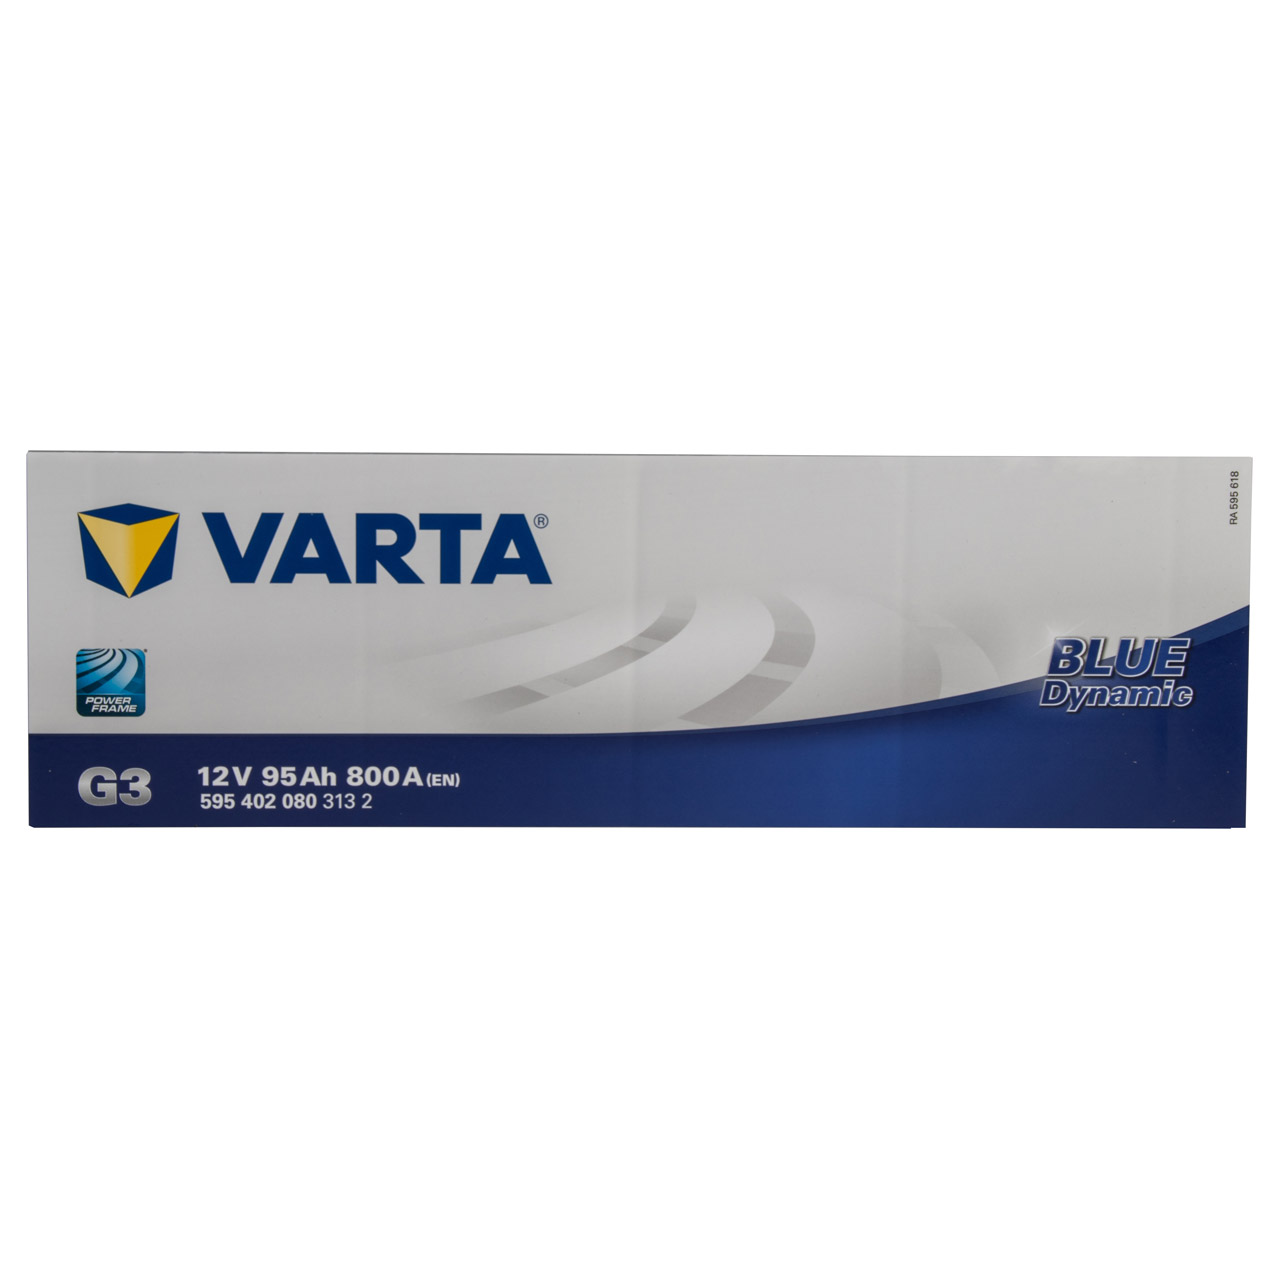 VARTA BLUE dynamic G3 Autobatterie Batterie Starterbatterie 12V 95Ah 800A